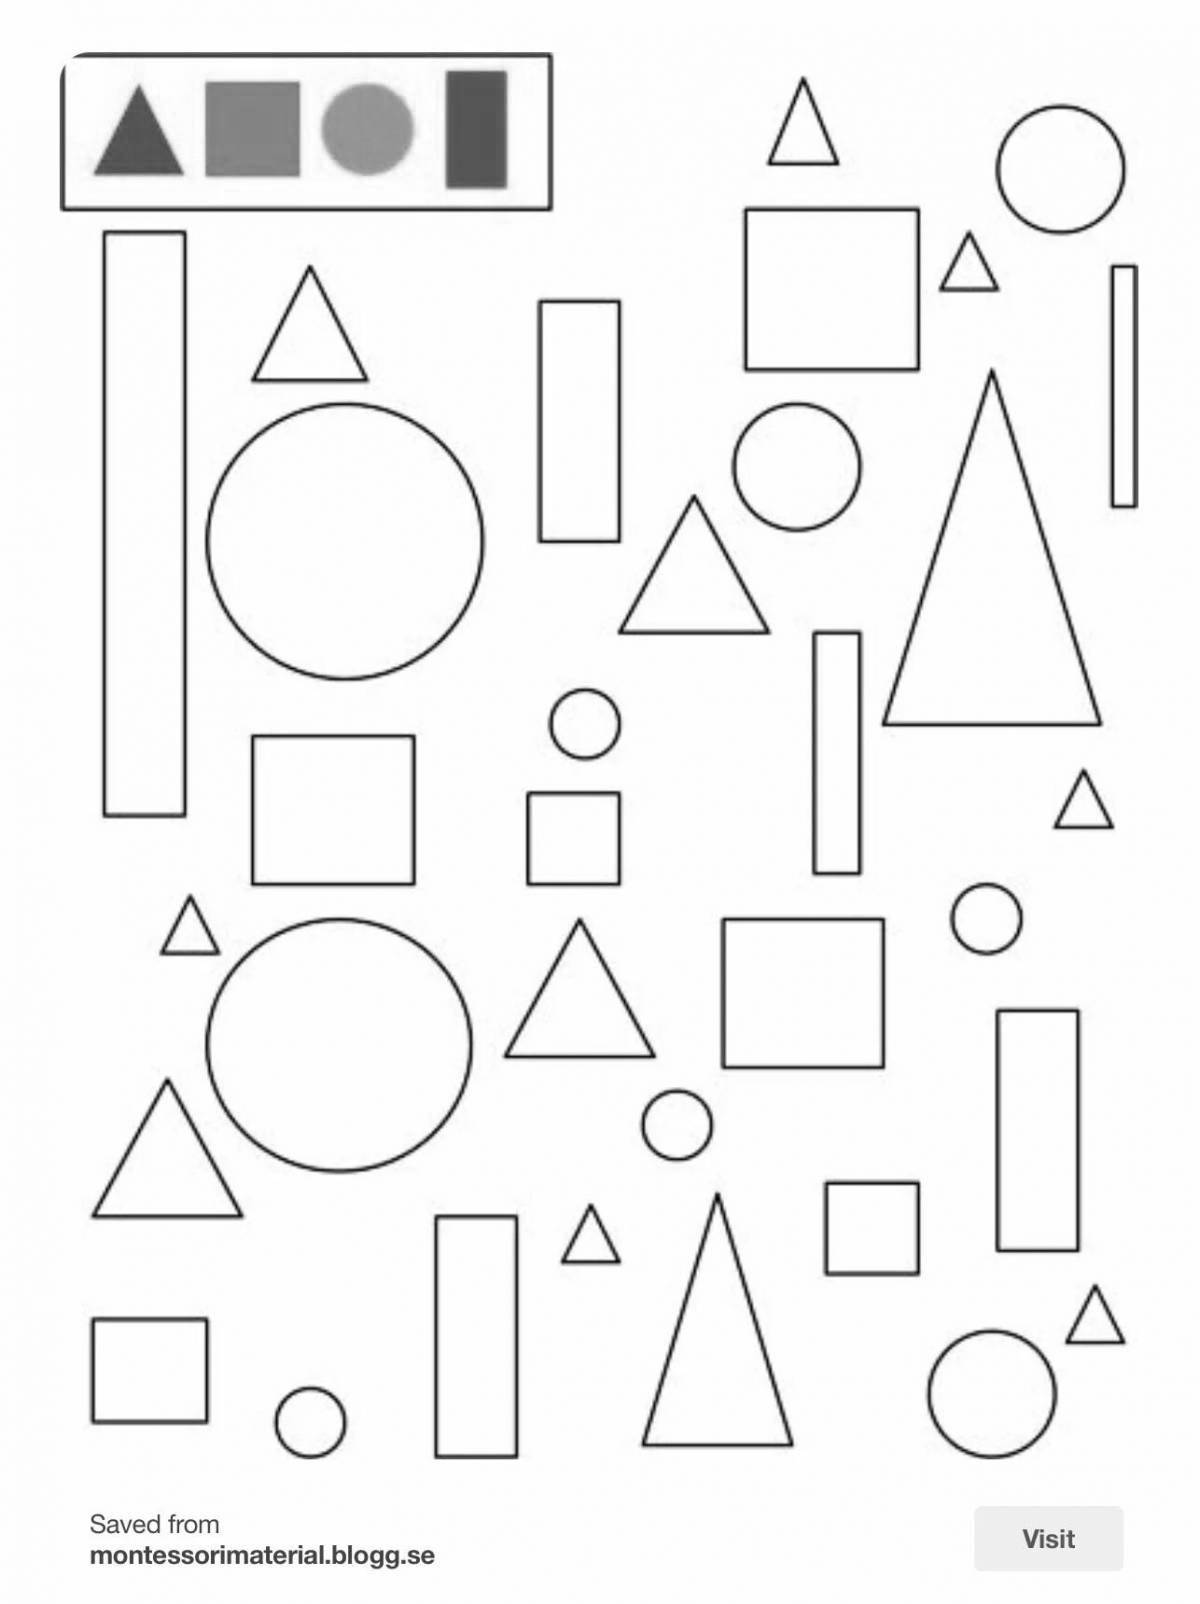 Fun coloring geometric shapes for preschoolers